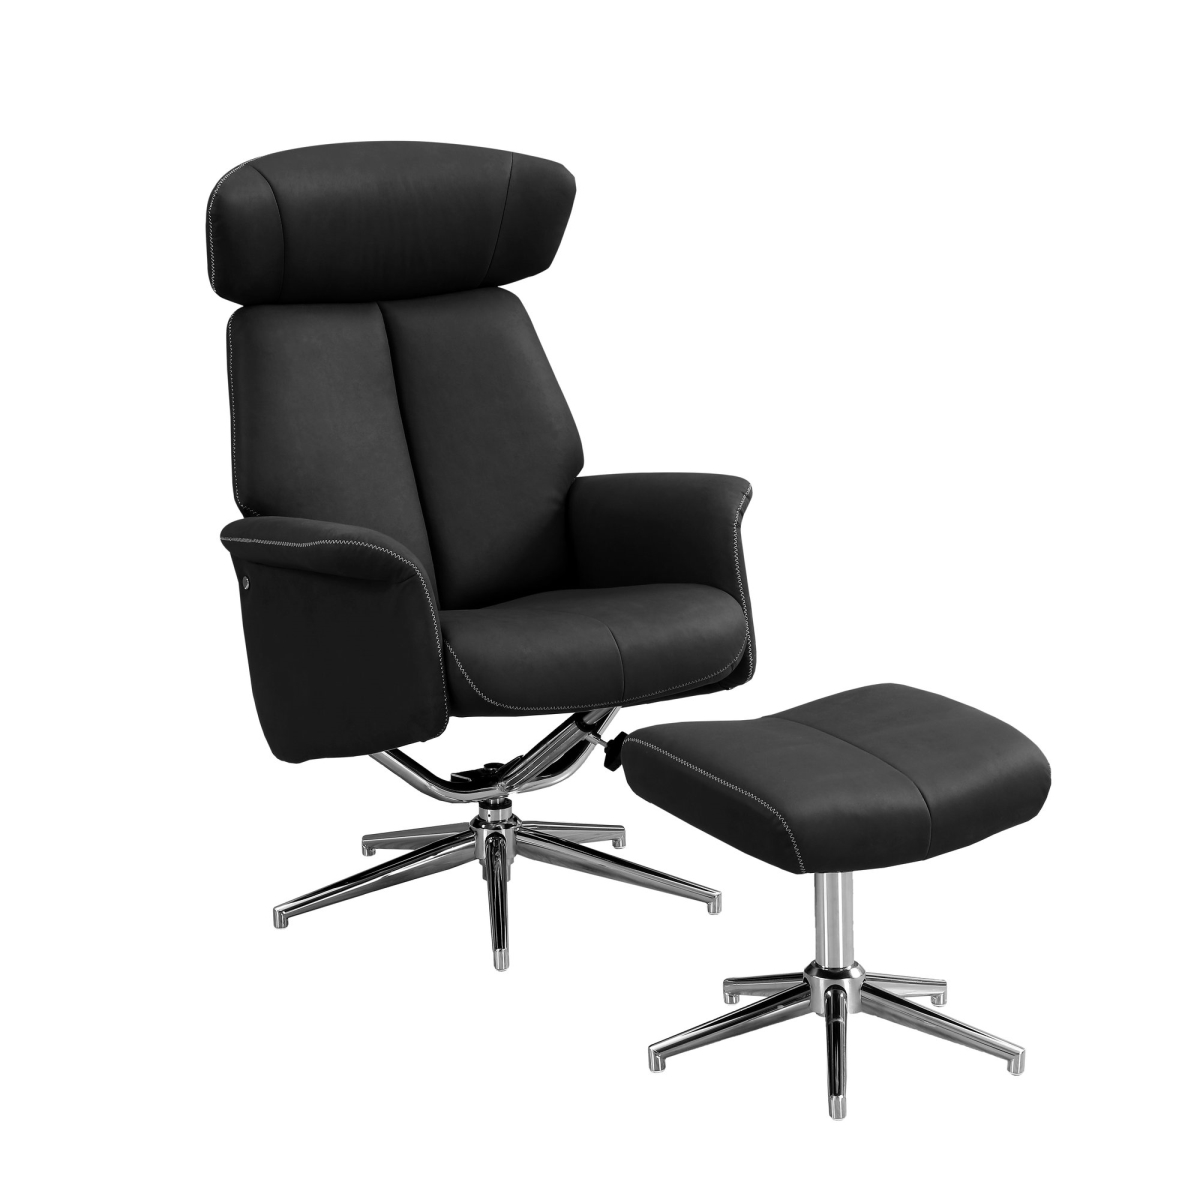 Recliner - 2 Piece Set & Black Swivel - Adjustable Headrest